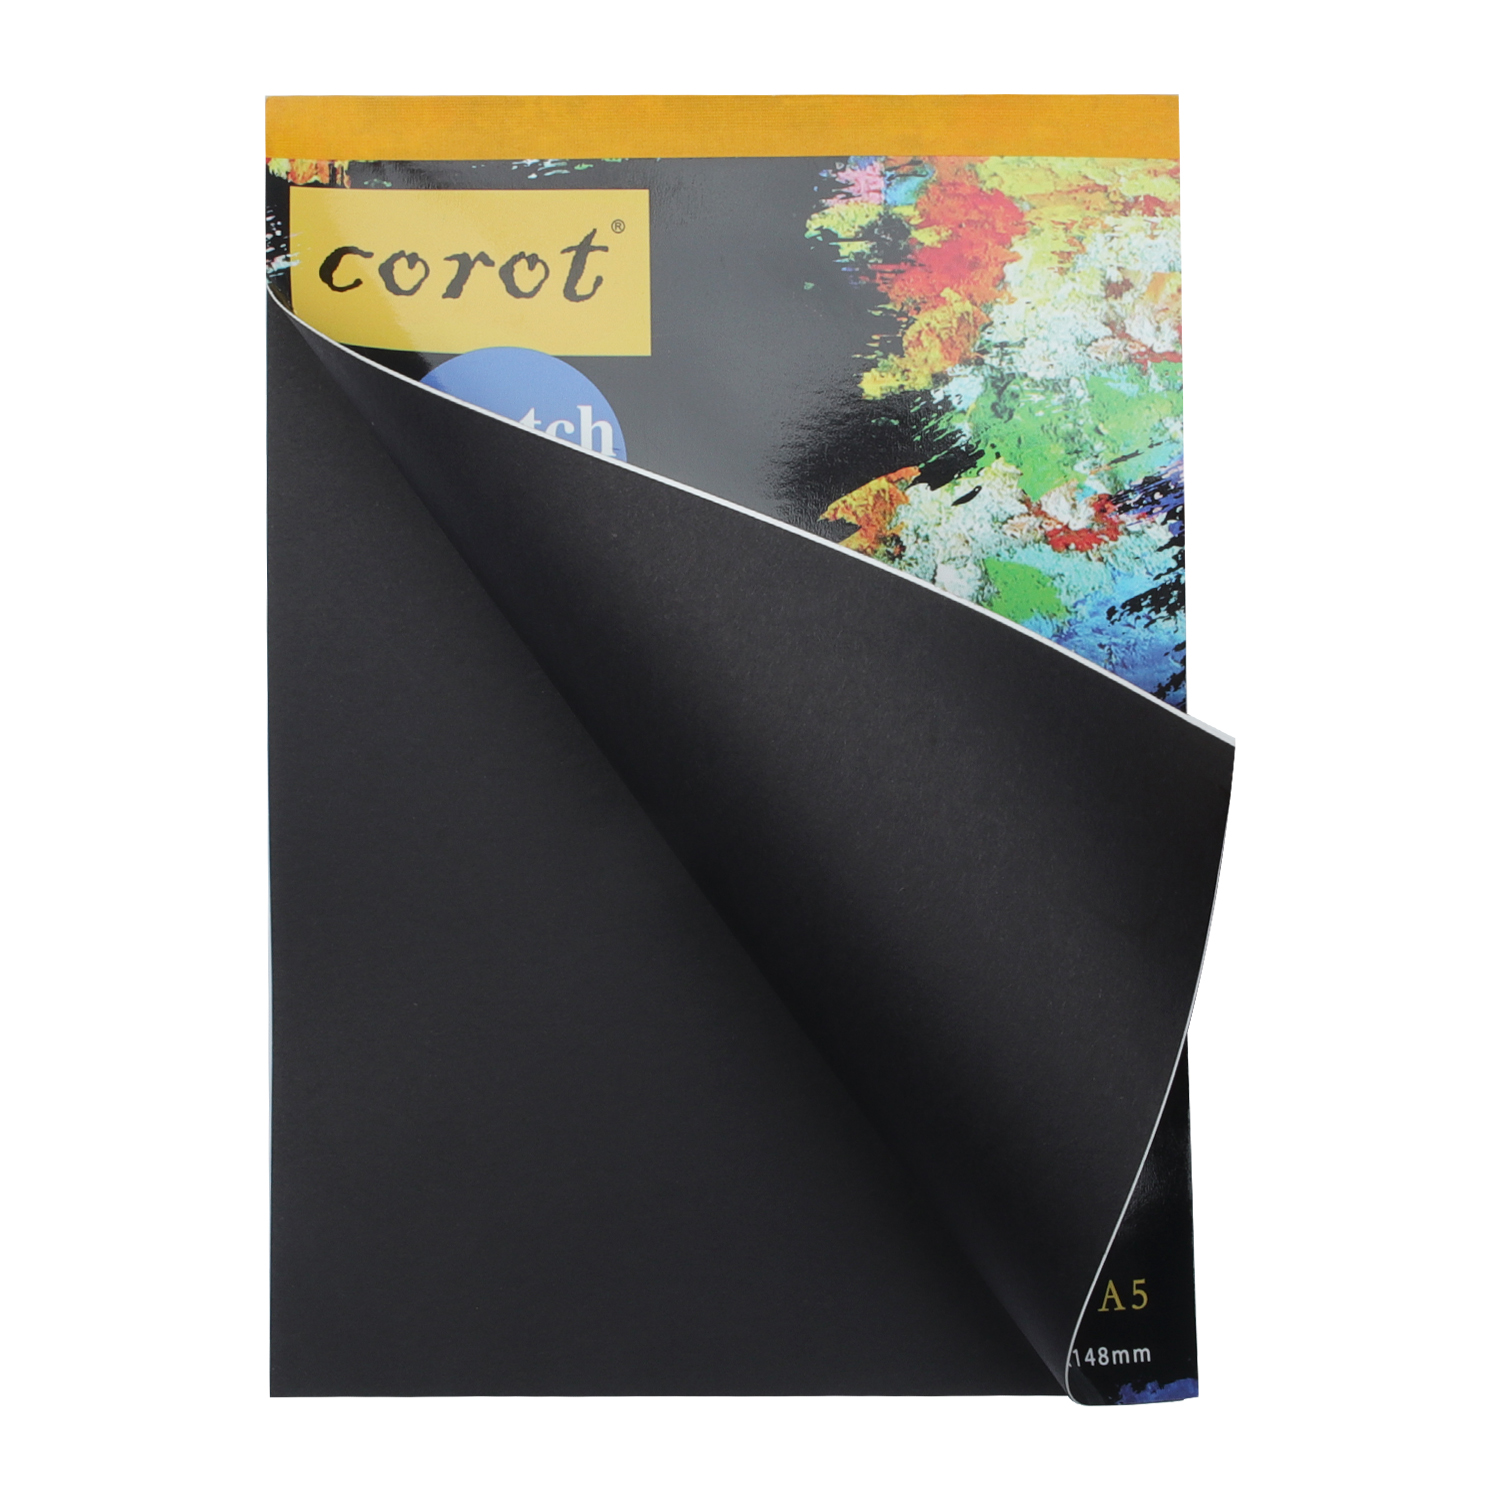 A4/A5 Paper Vintage Black Cardboard Premium Sketch Pad Bring Book Paper 140GSM/25 листов для пастельных/карандаш и уголь.